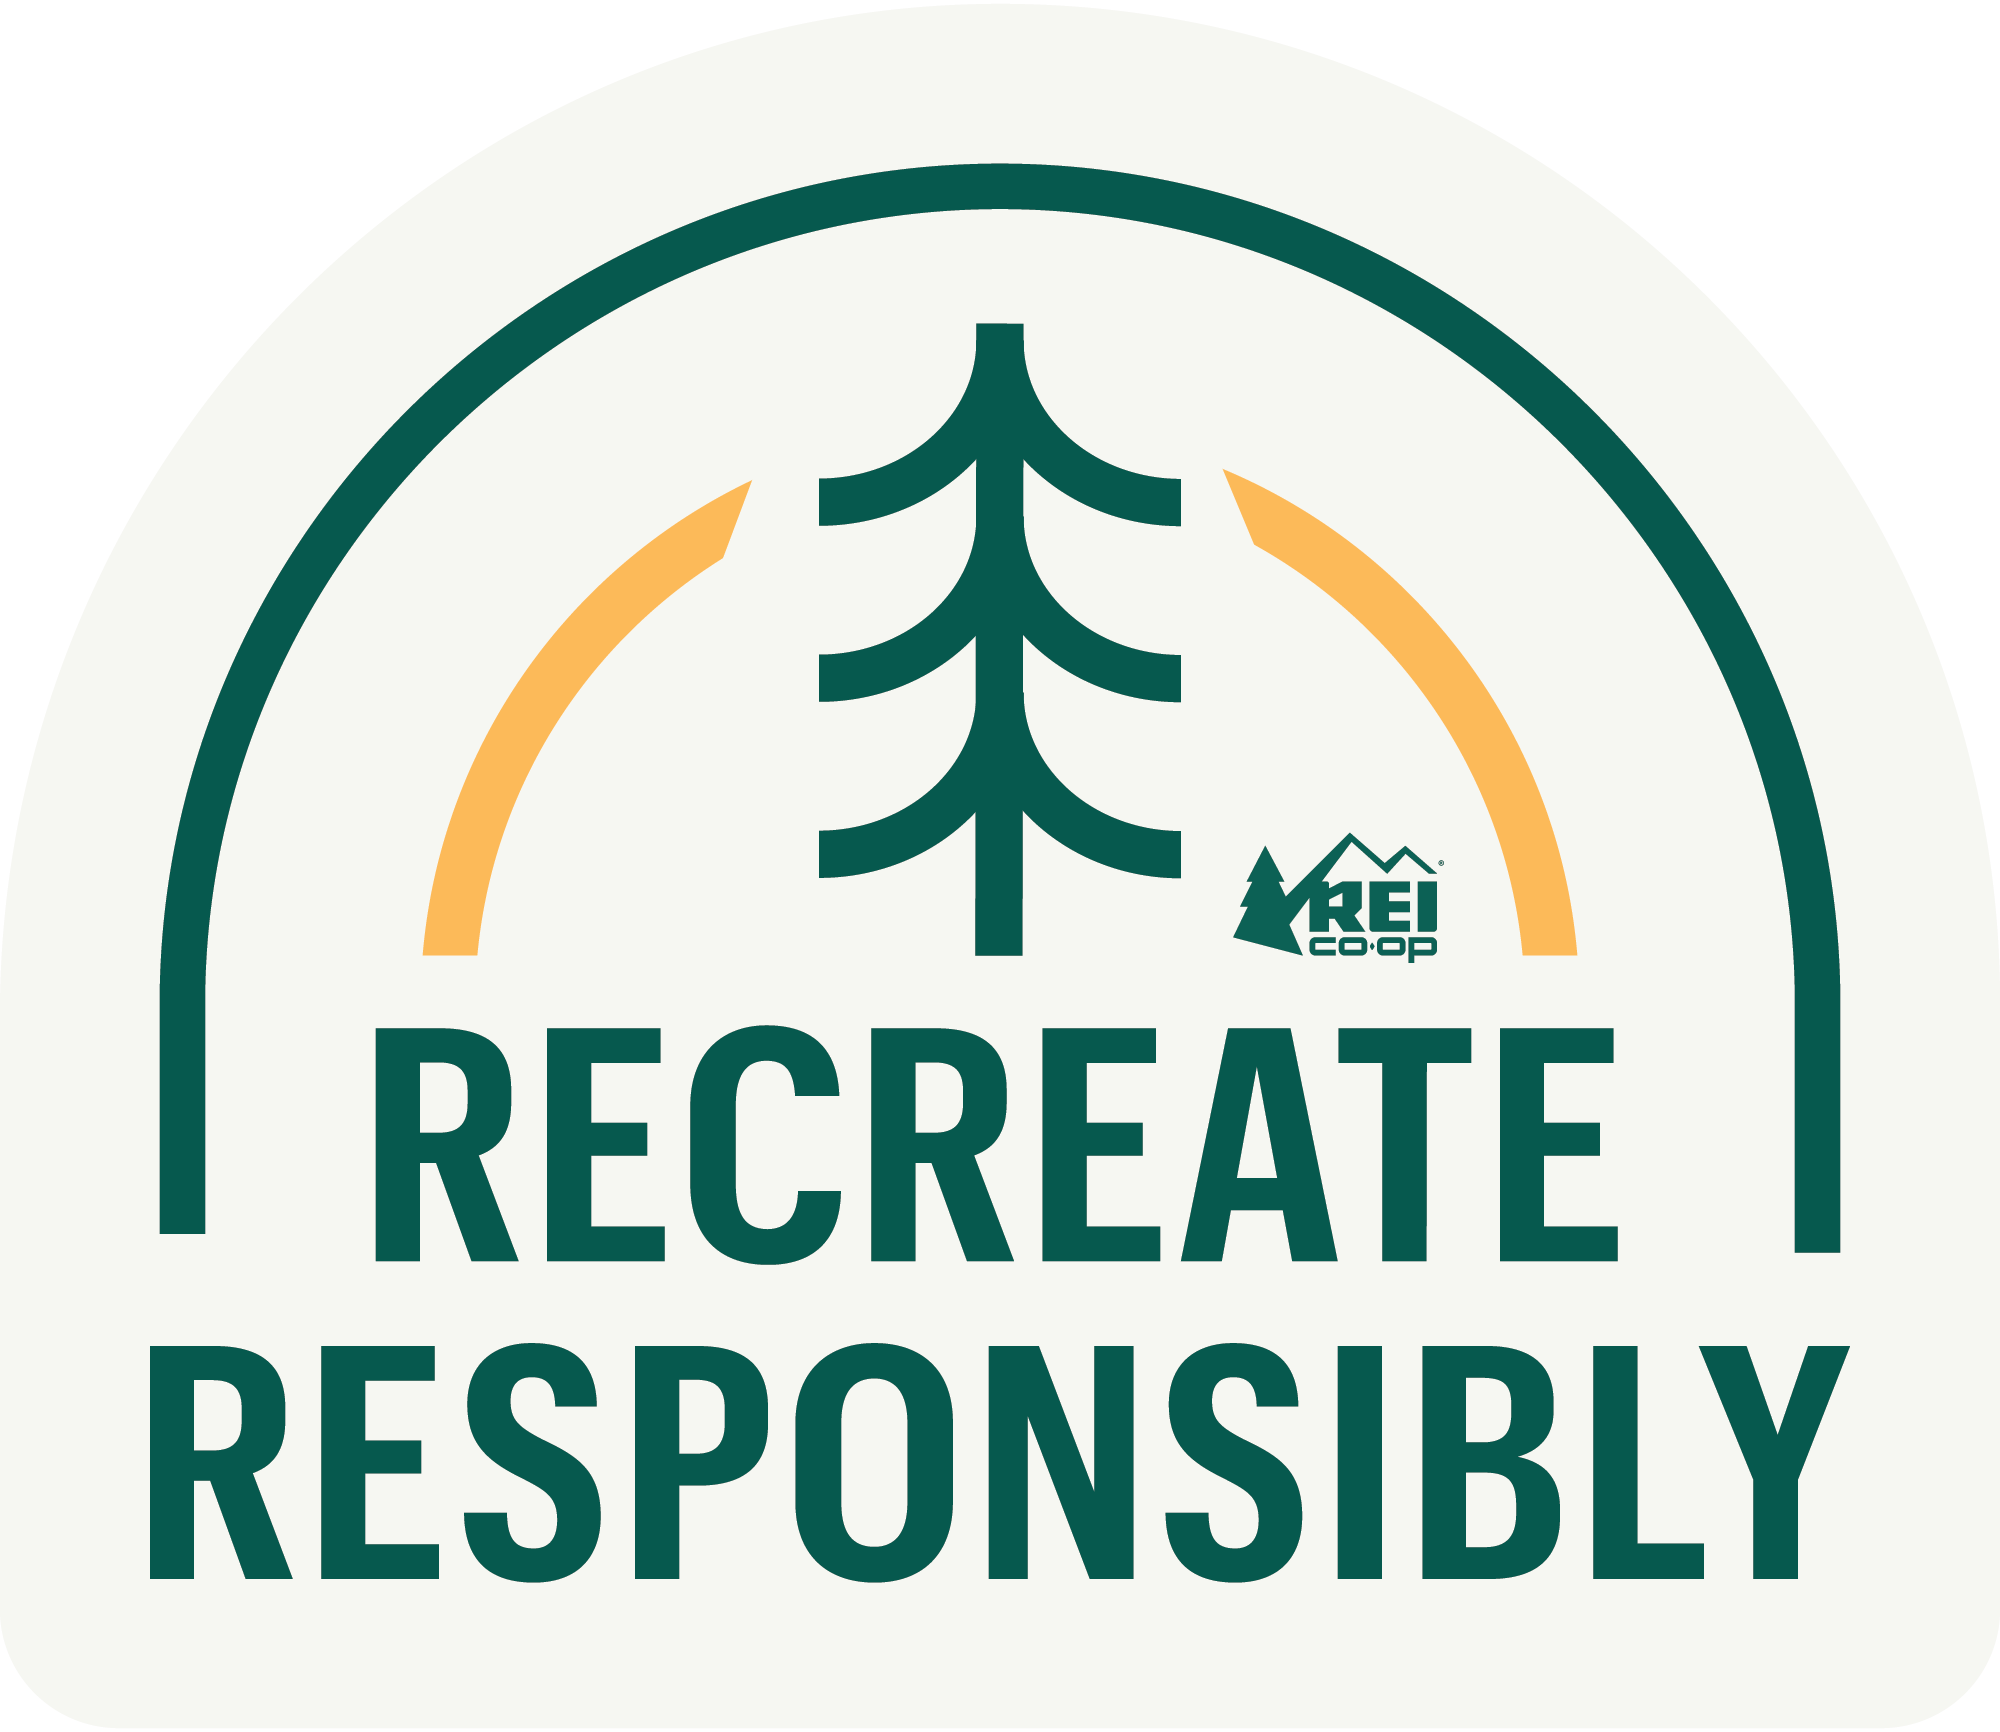 recreate responsibly sticker 03